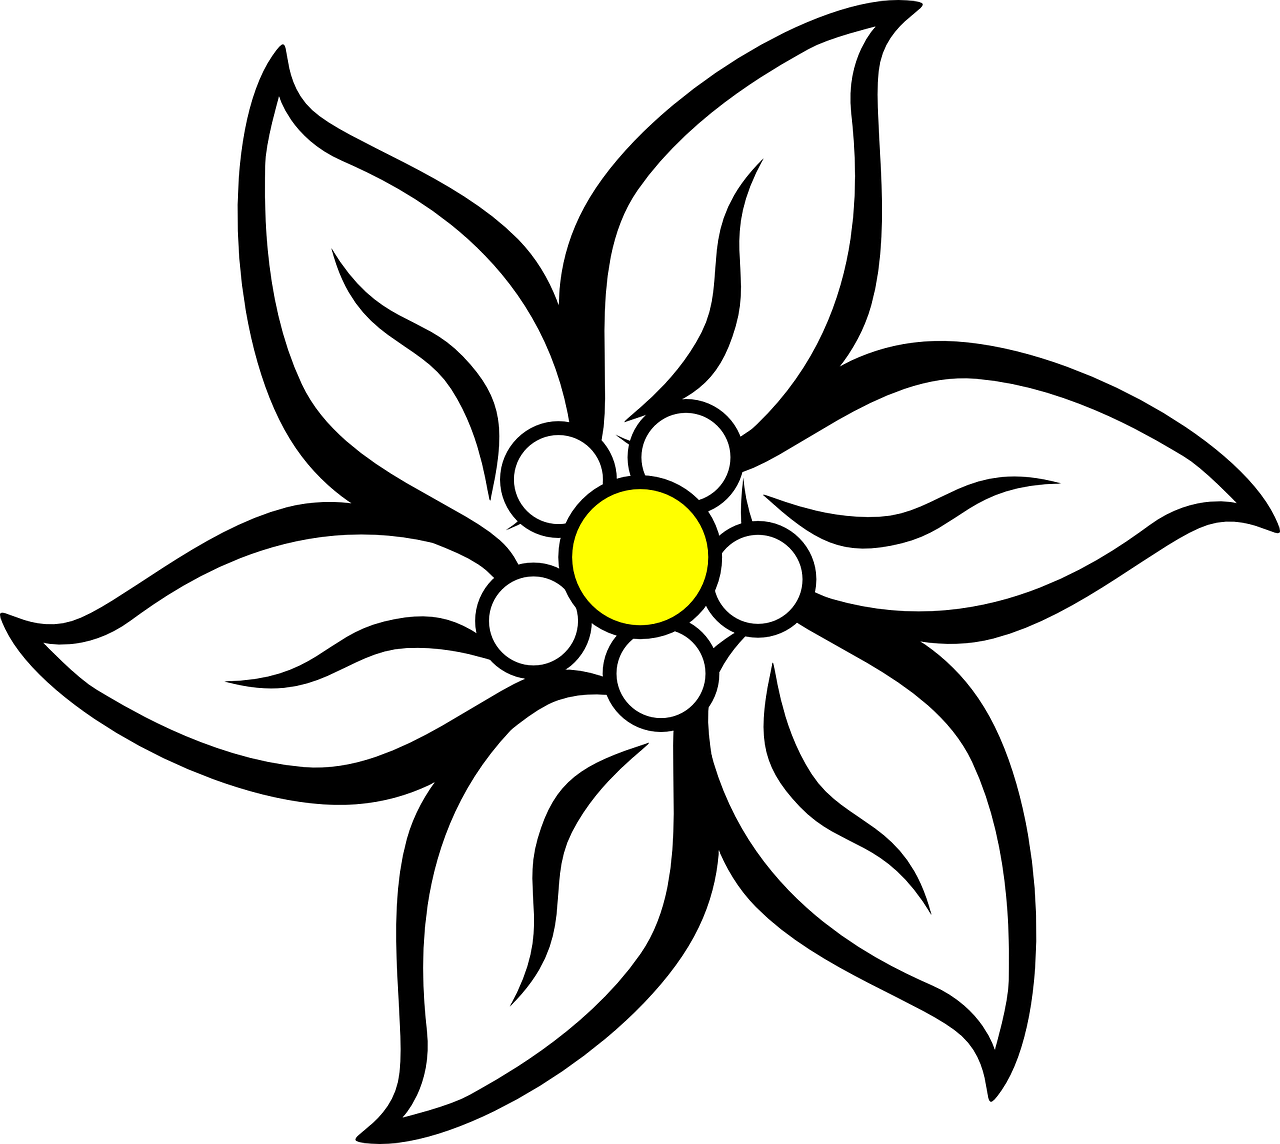 a yellow and white flower on a black background, inspired by Yayou Kusama, deviantart, minimalism, amoled, 2 0 5 6 x 2 0 5 6, watchmen comics color scheme, minimalist logo without text